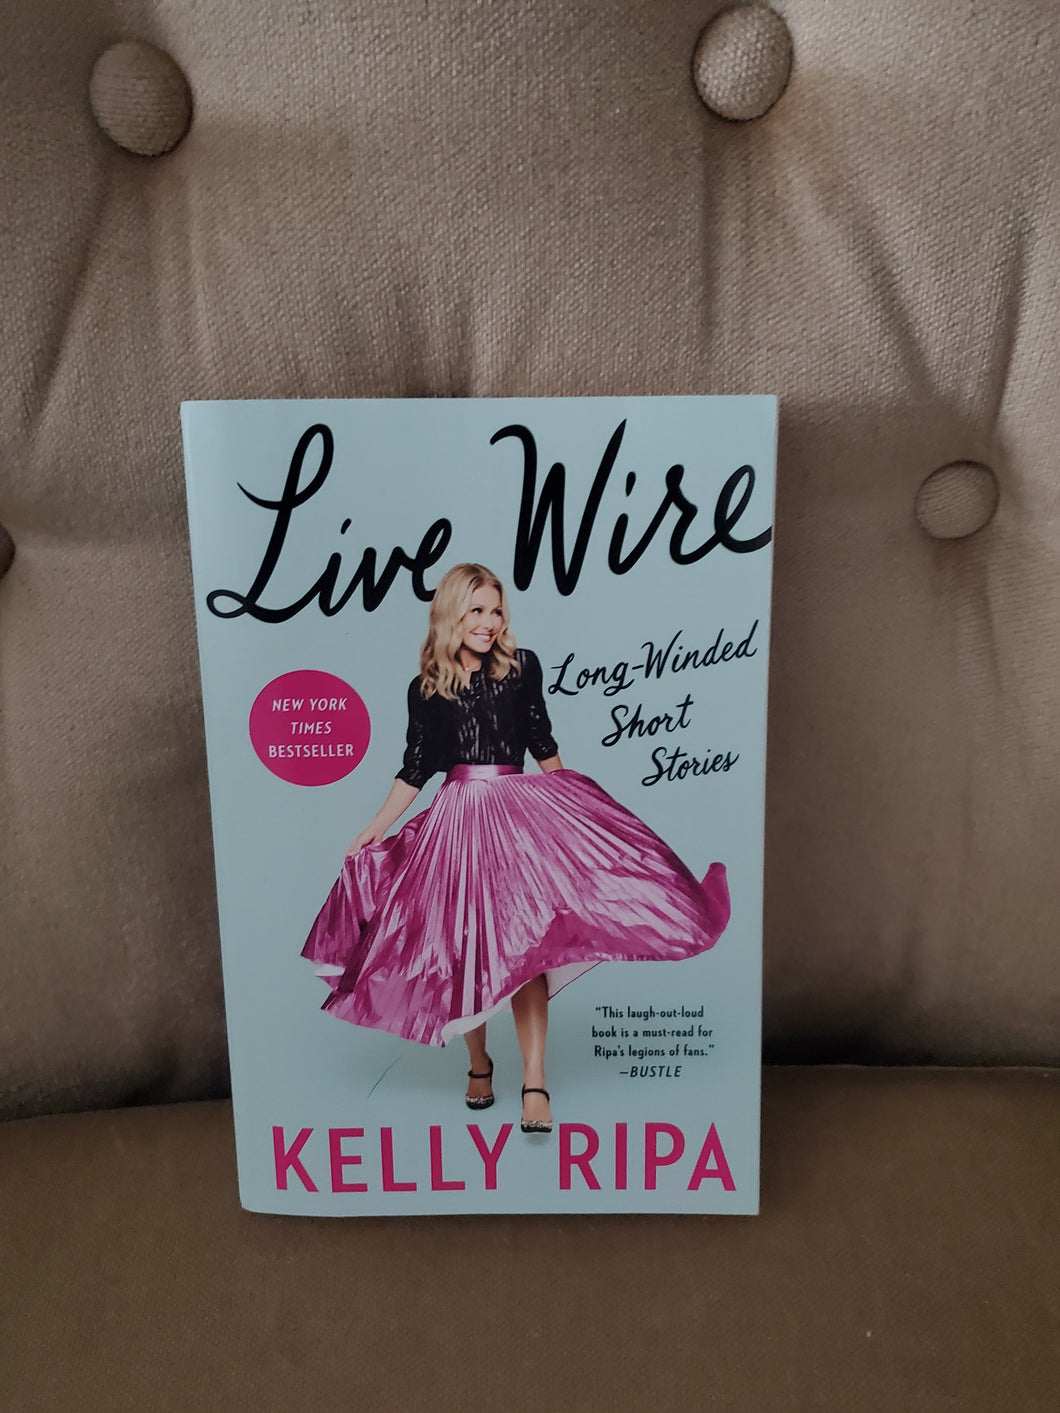 Live Wire (Kelly Ripa)